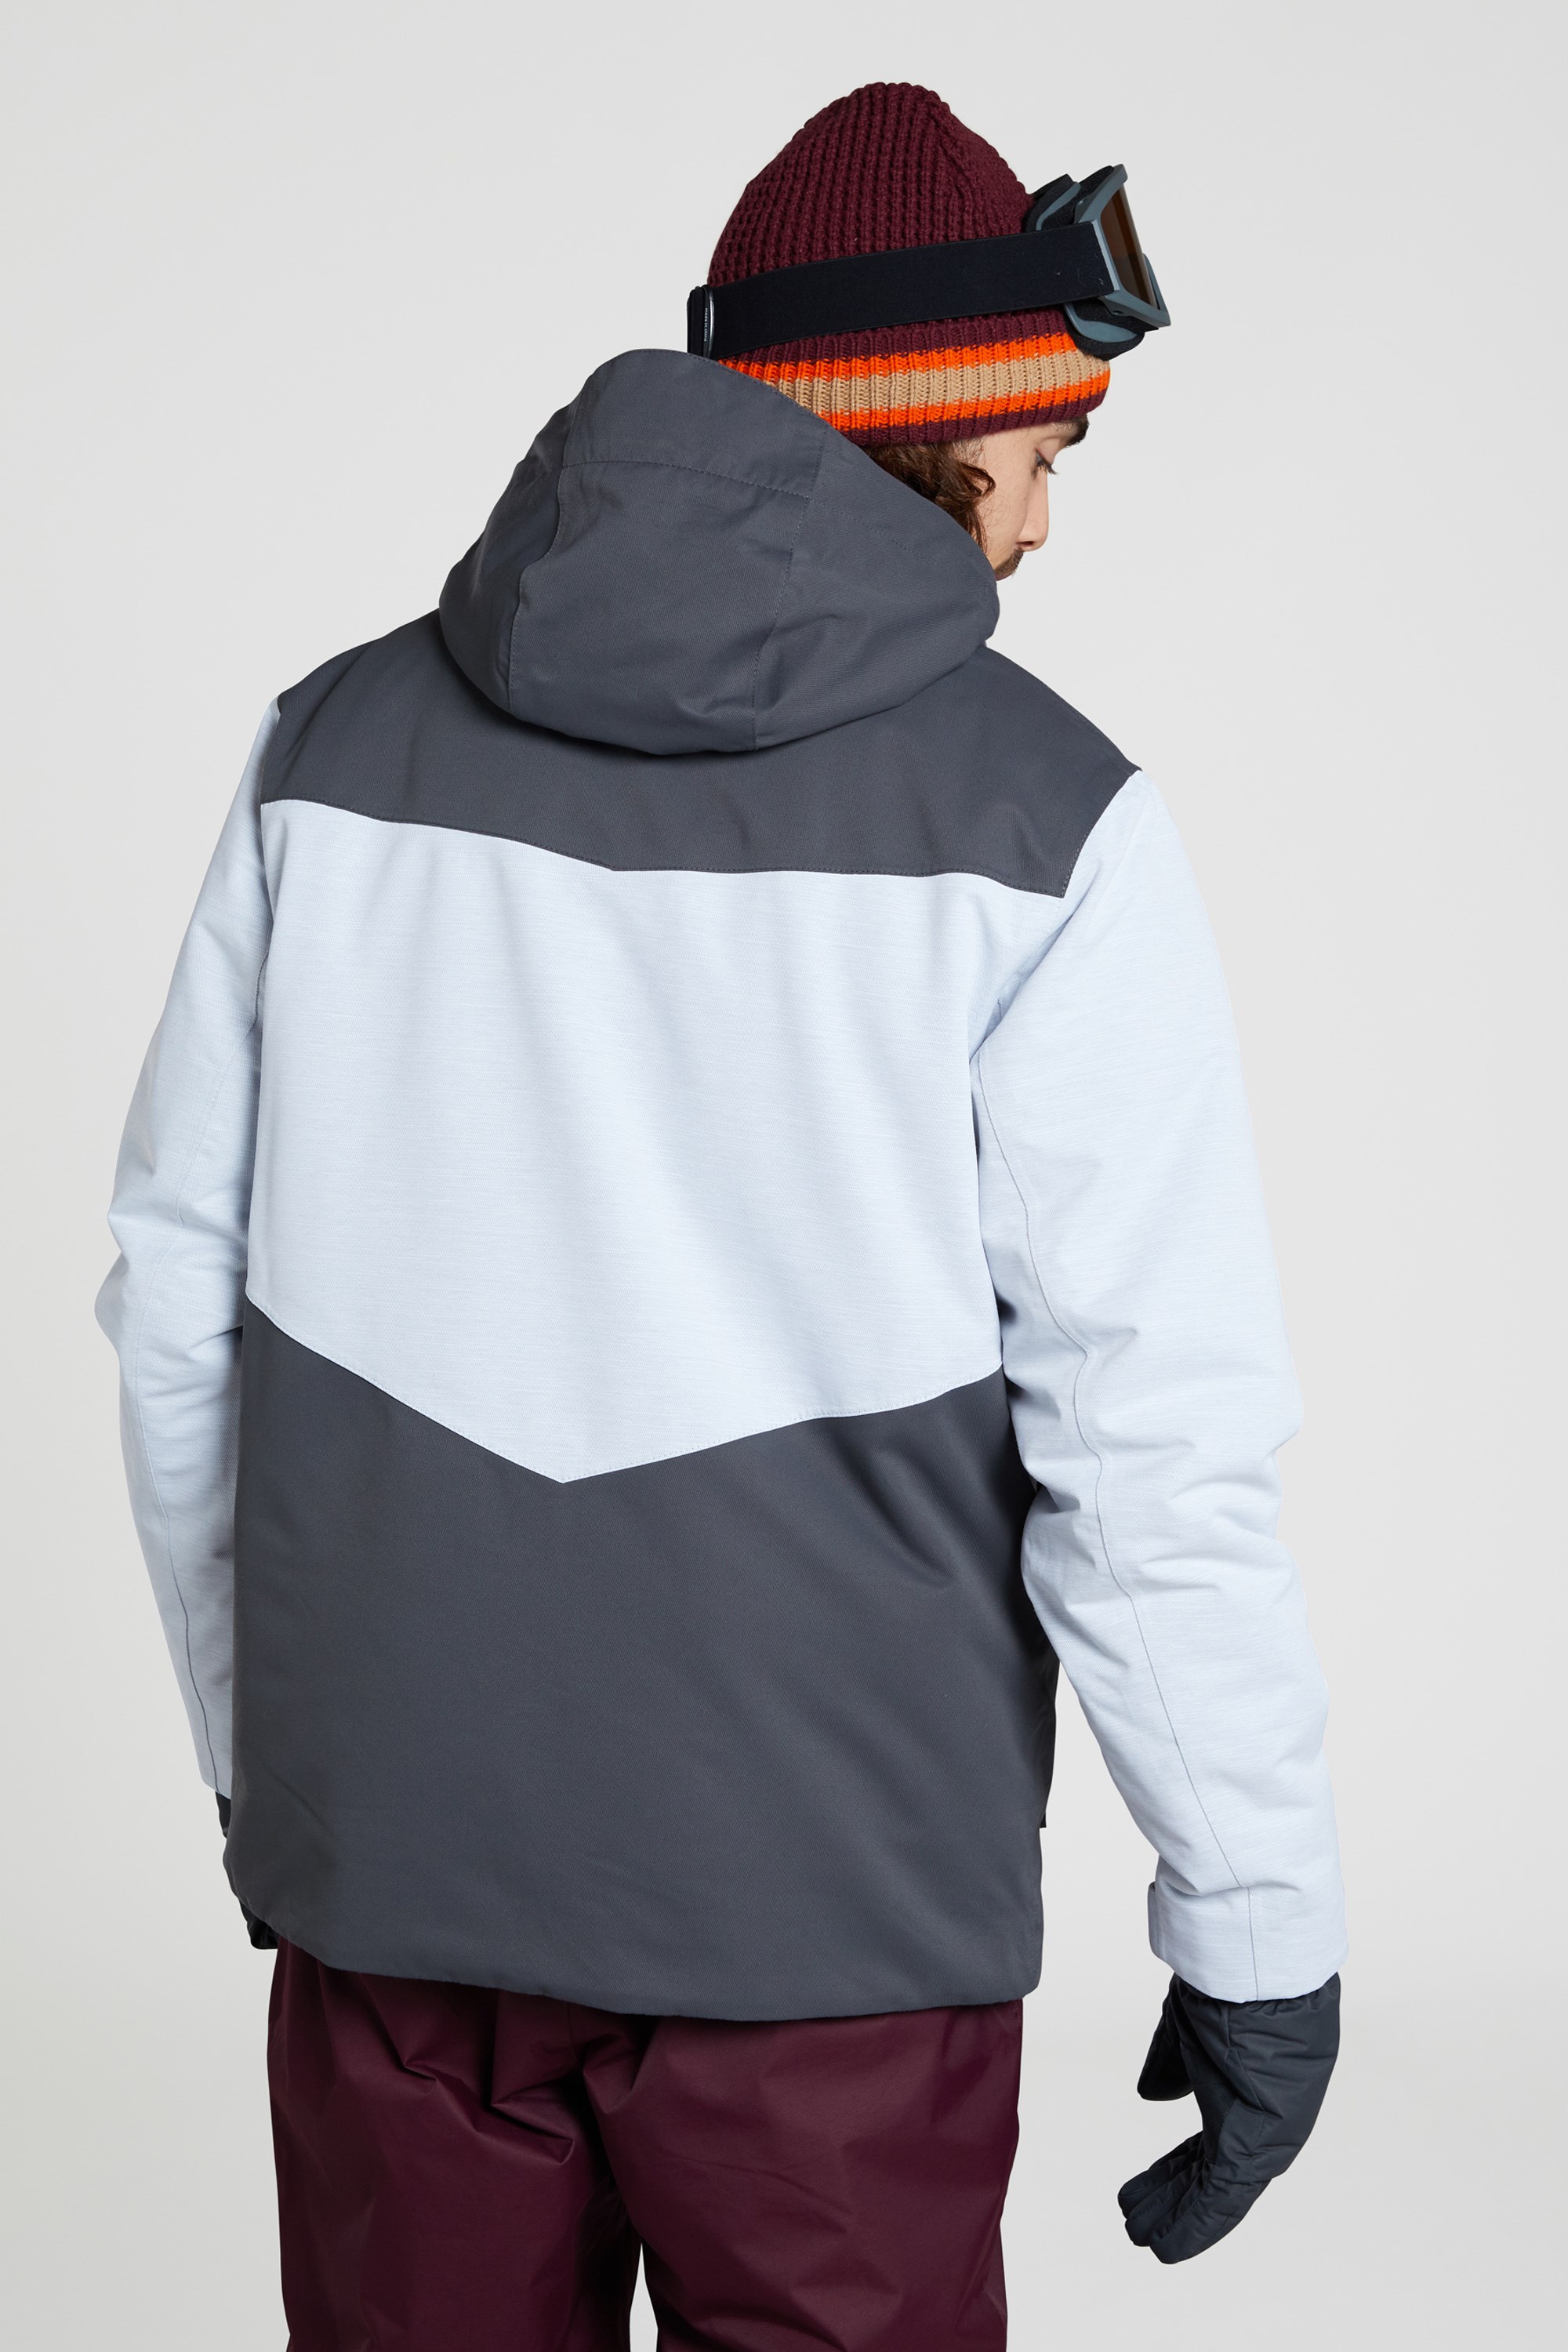 For Camping in Winter Waterproof Mens Jacket Breathable Mountain Warehouse Luna Mens Ski Jacket Taped Seams Rain Coat Detachable Snow Skirt 